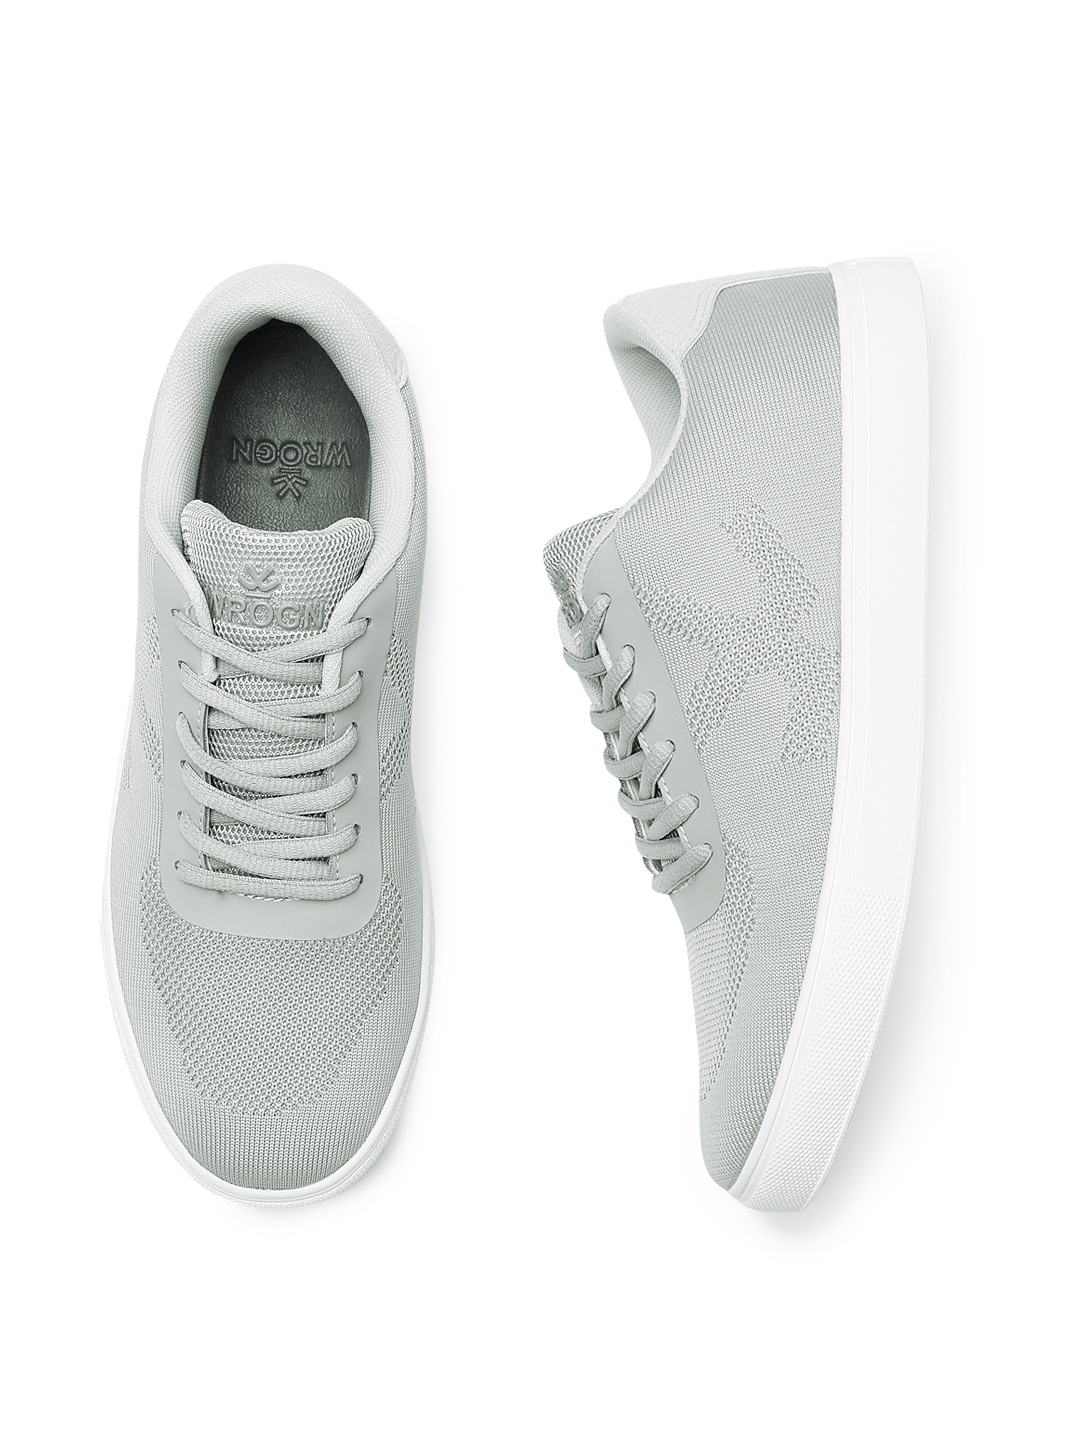 WROGN Men Grey Sneakers - Casual Shoes 